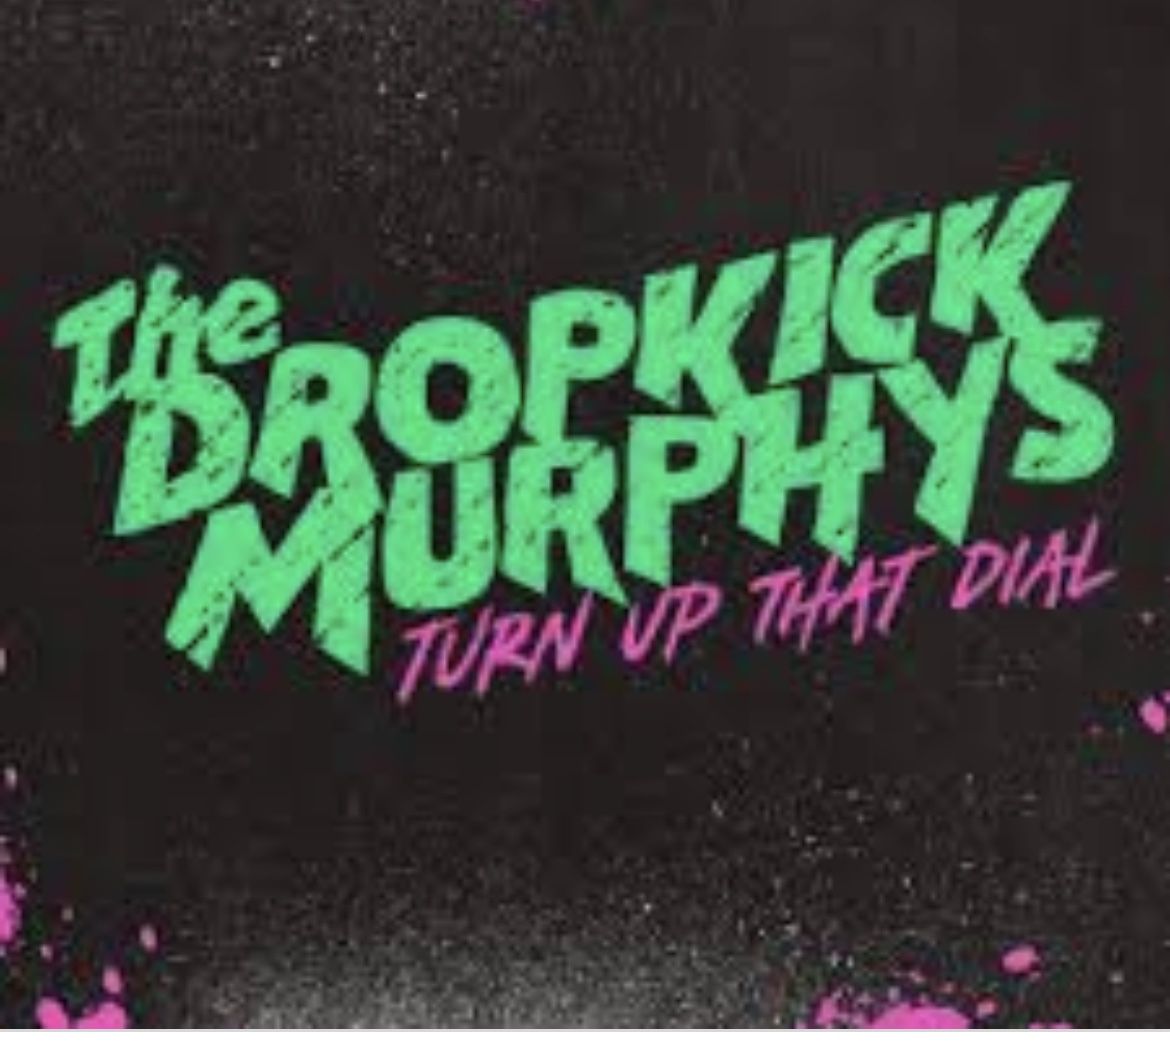 Drop kick Murphy Tickets (3)